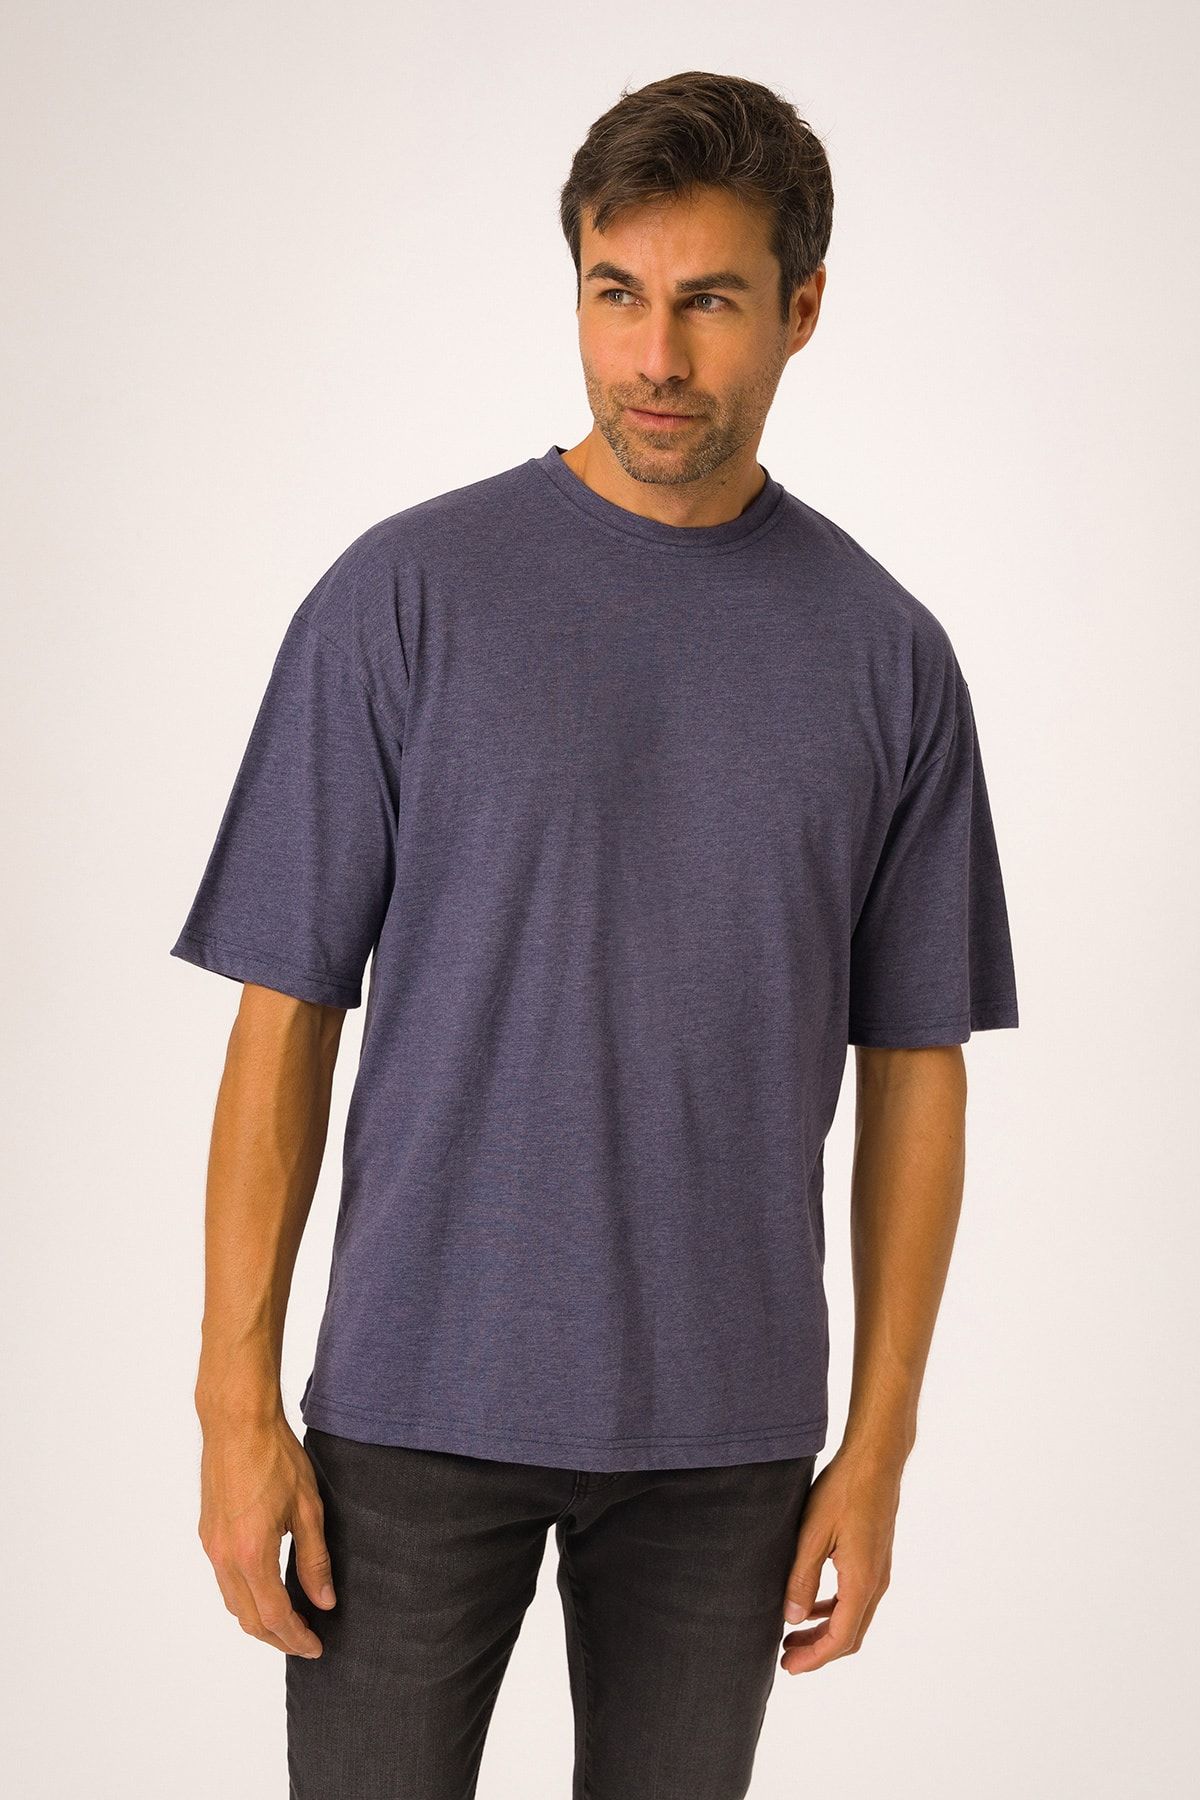 Runever Mavi Oversize Yuvarlak Yaka Basıc Erkek T-shirt 22187